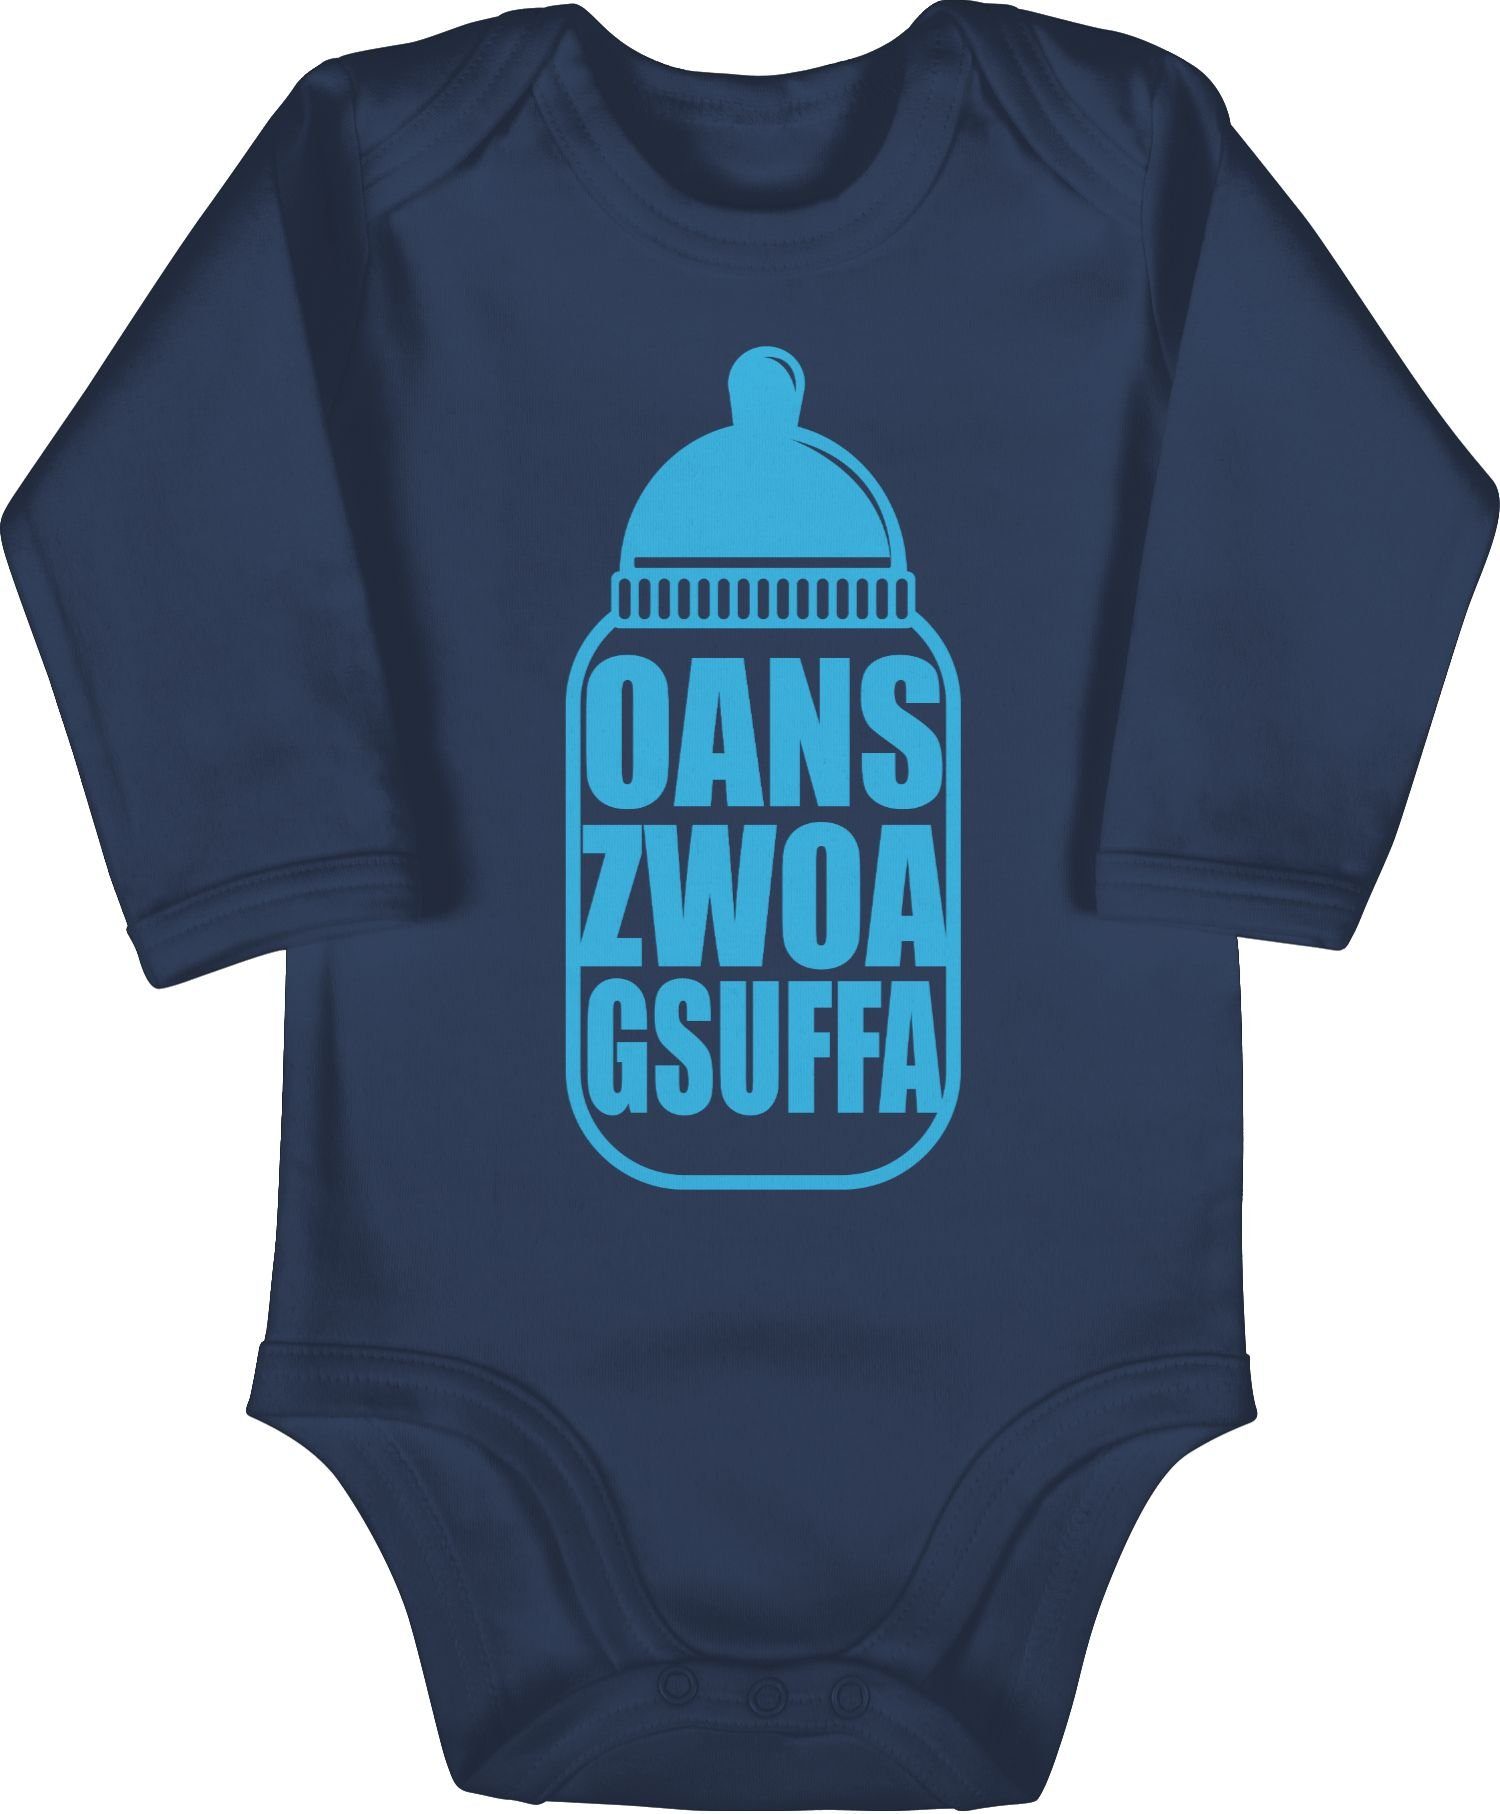 Shirtracer Shirtbody Babyflasche Oans Zwoa Gsuffa blau Mode für Oktoberfest Baby Outfit 1 Navy Blau